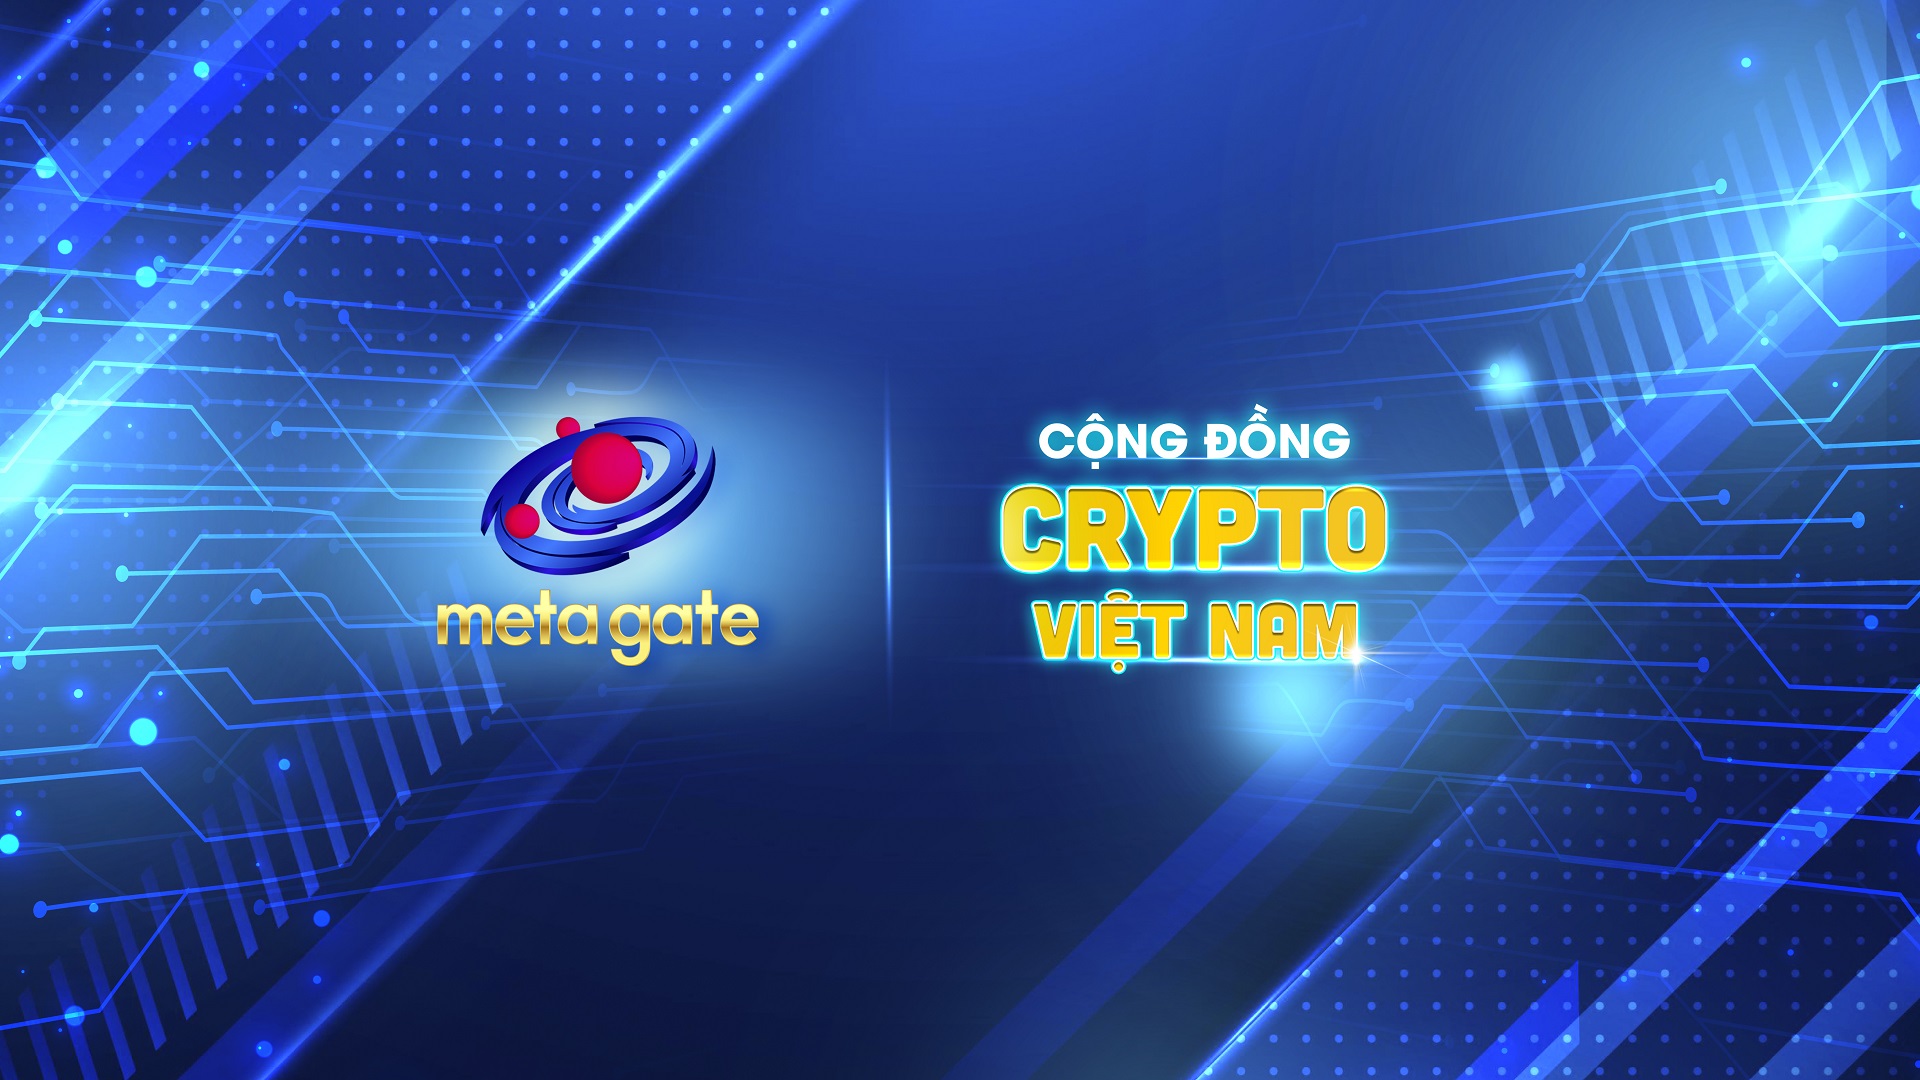 MetaGate - Cộng Đồng Crypto Việt Nam